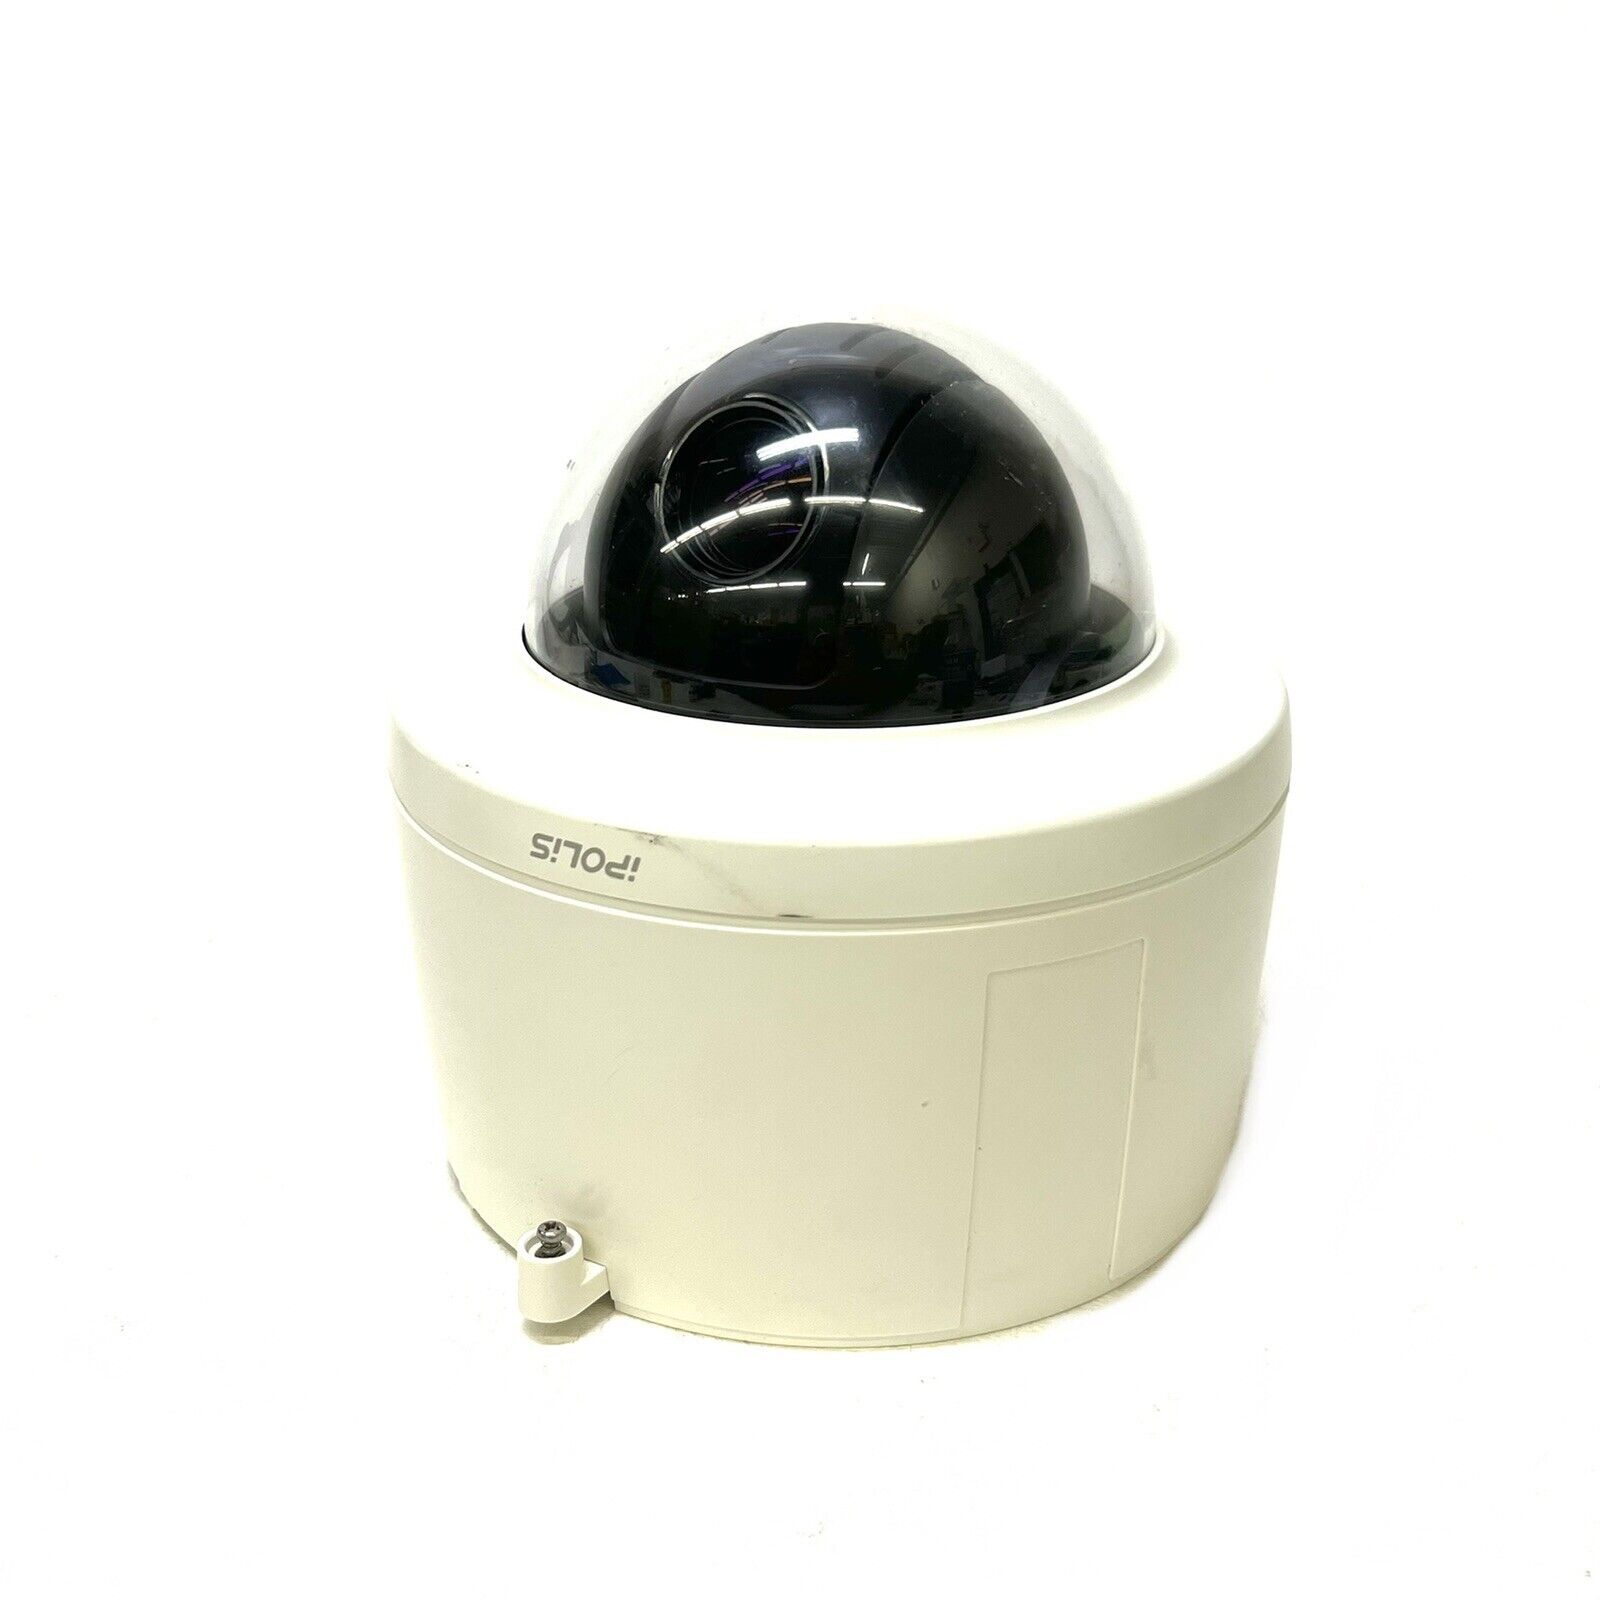 Samsung Model SNP-3120N, 12X WDR PTZ Dome Security Surveillance Camera